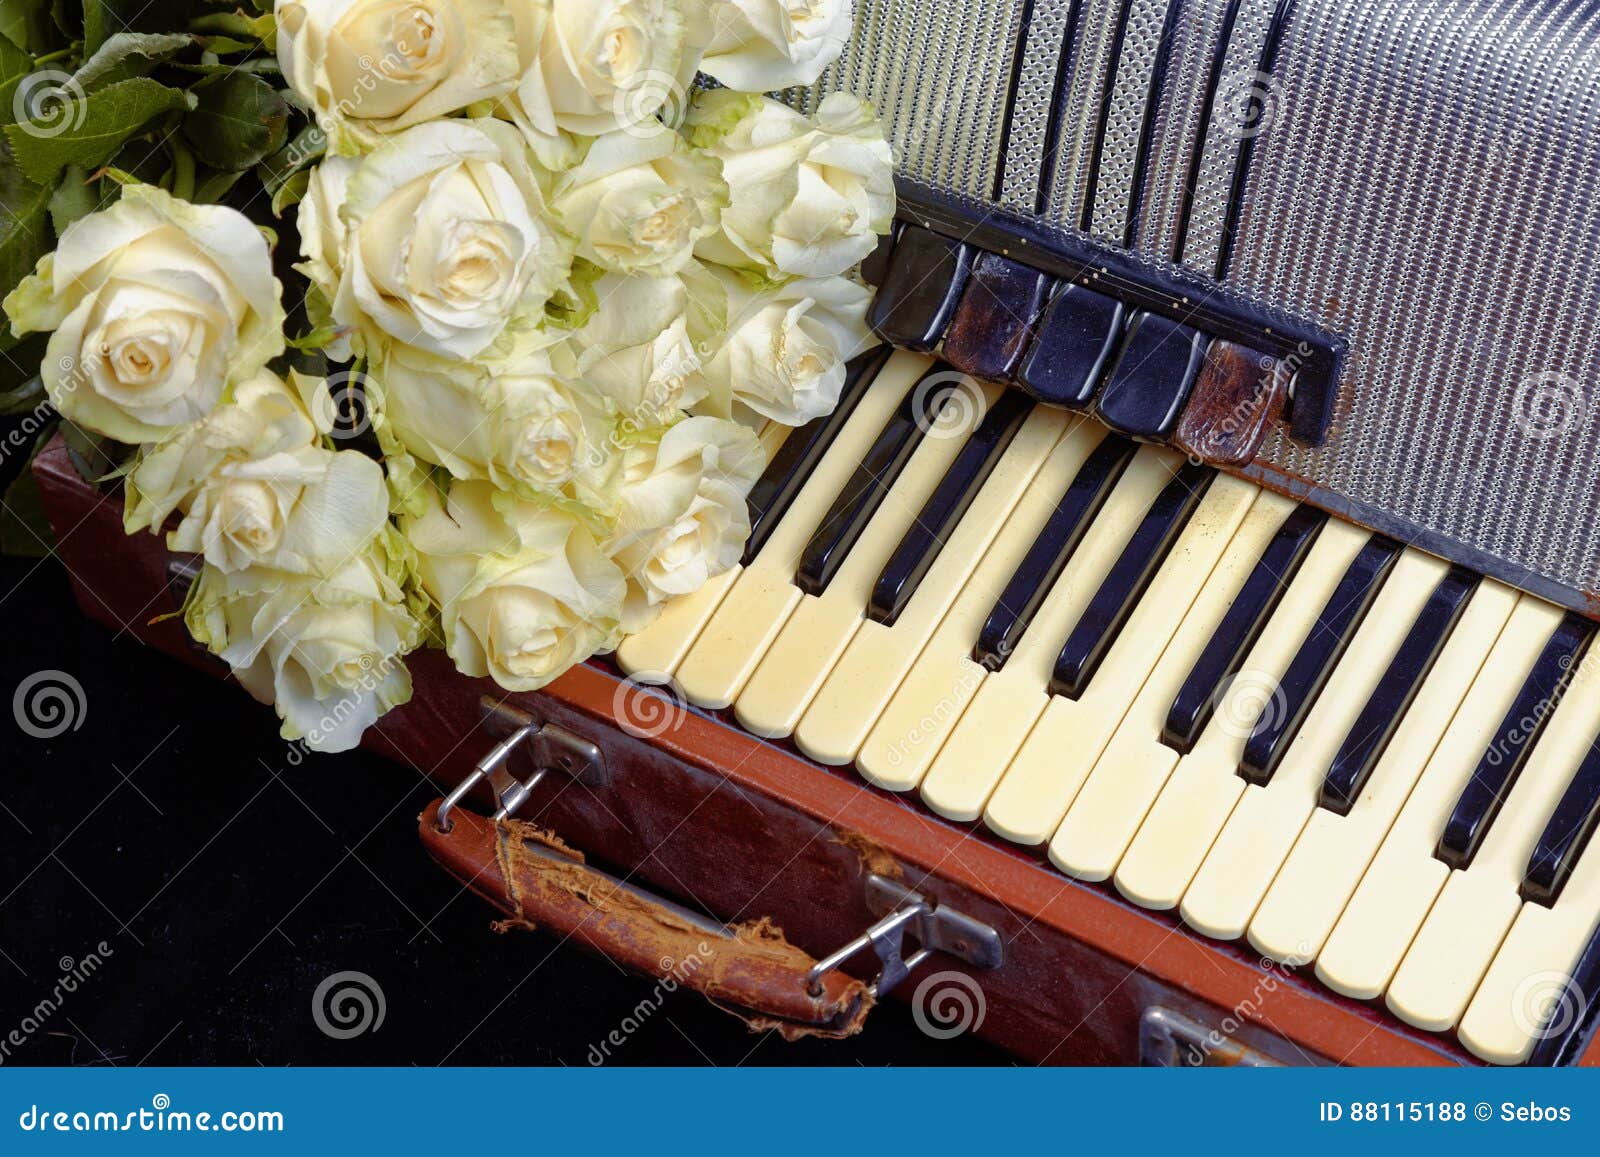 Roses, Love, Gift, Romance, Still Life, Lovely, bonito, Romantic, Bouquet,  Flowers, HD wallpaper